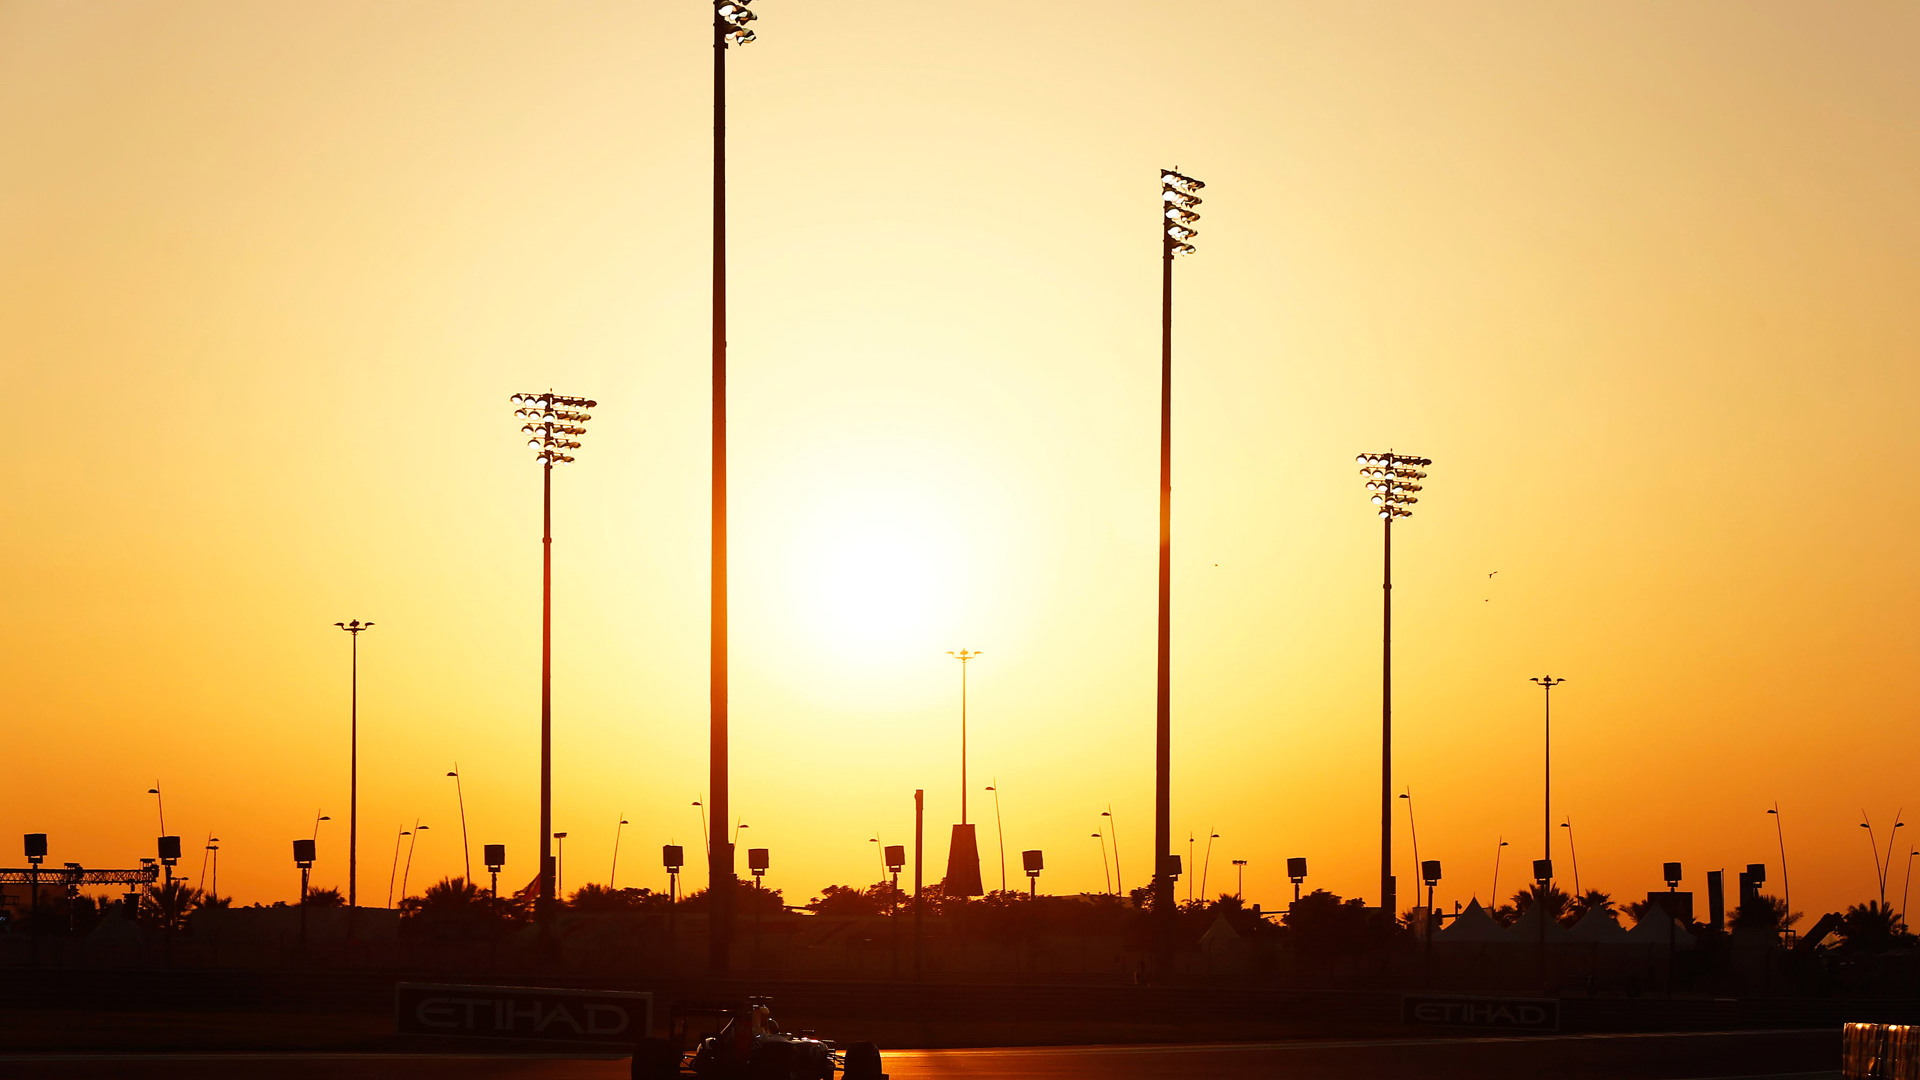 Yas Marina Circuit, home of the Formula 1 Abu Dhabi Grand Prix